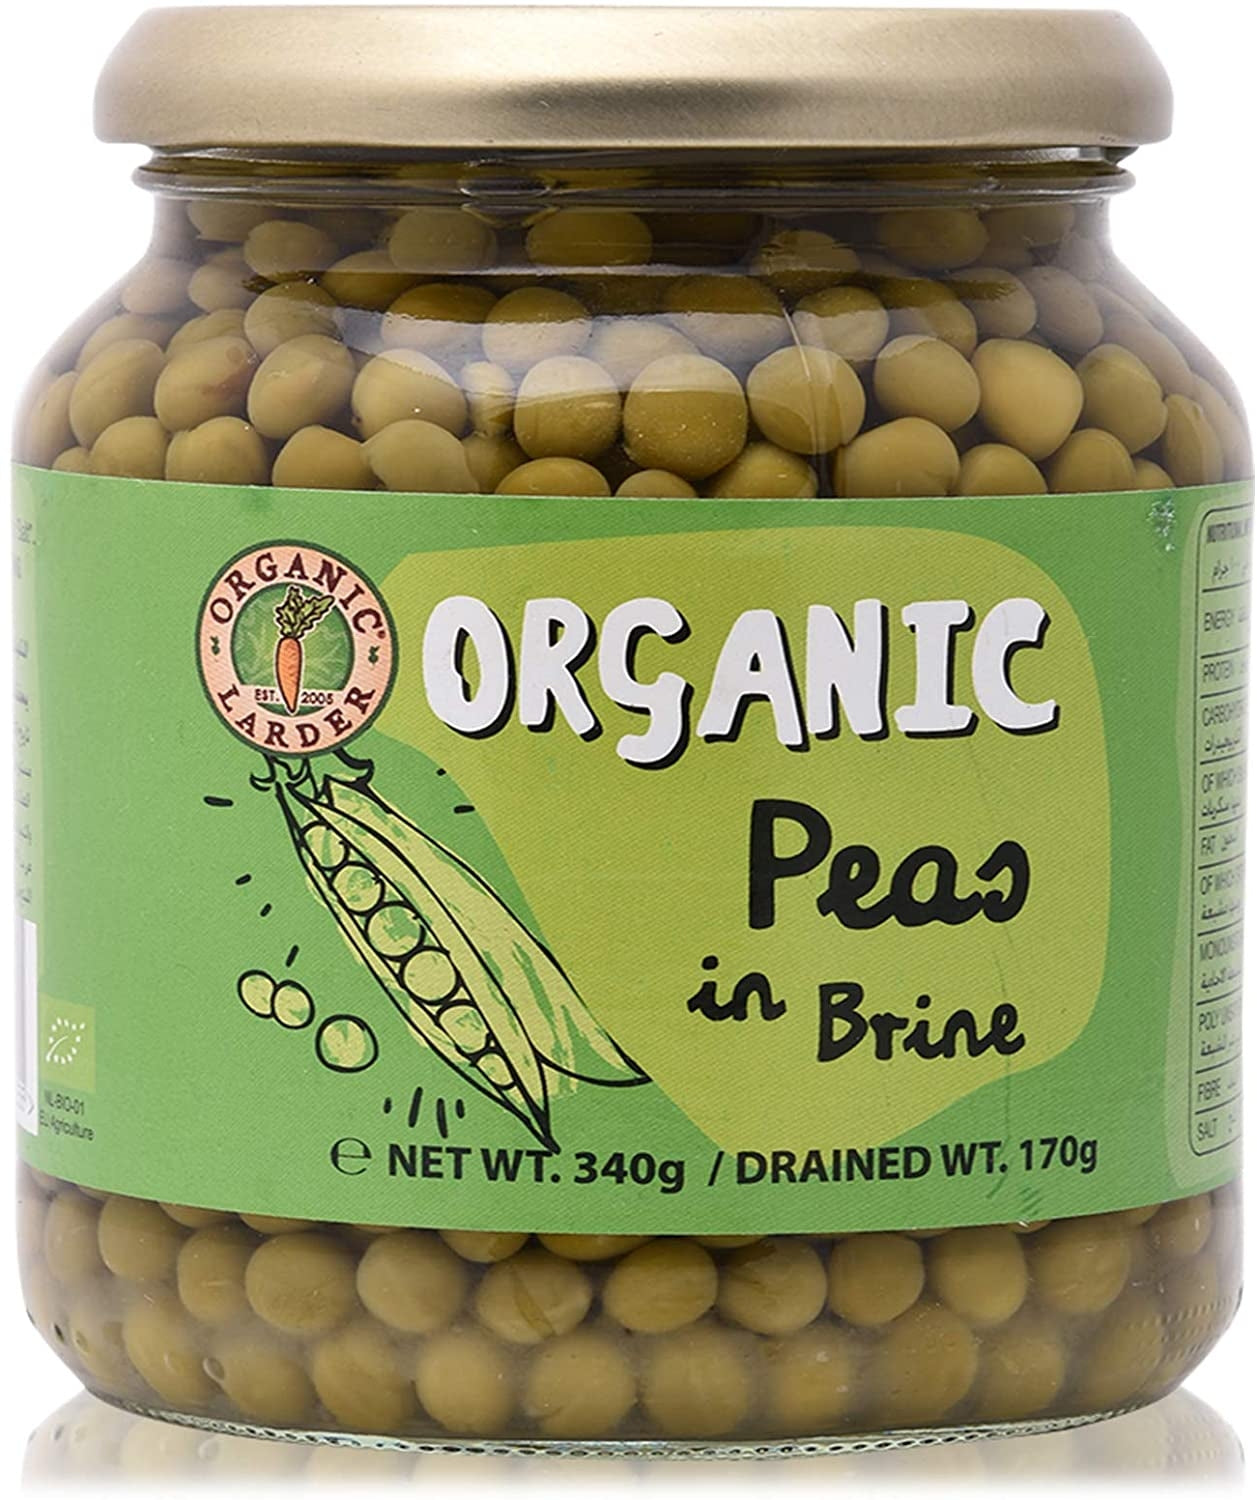 ORGANIC LARDER Peas In Brine, 340g - Organic, Vegan